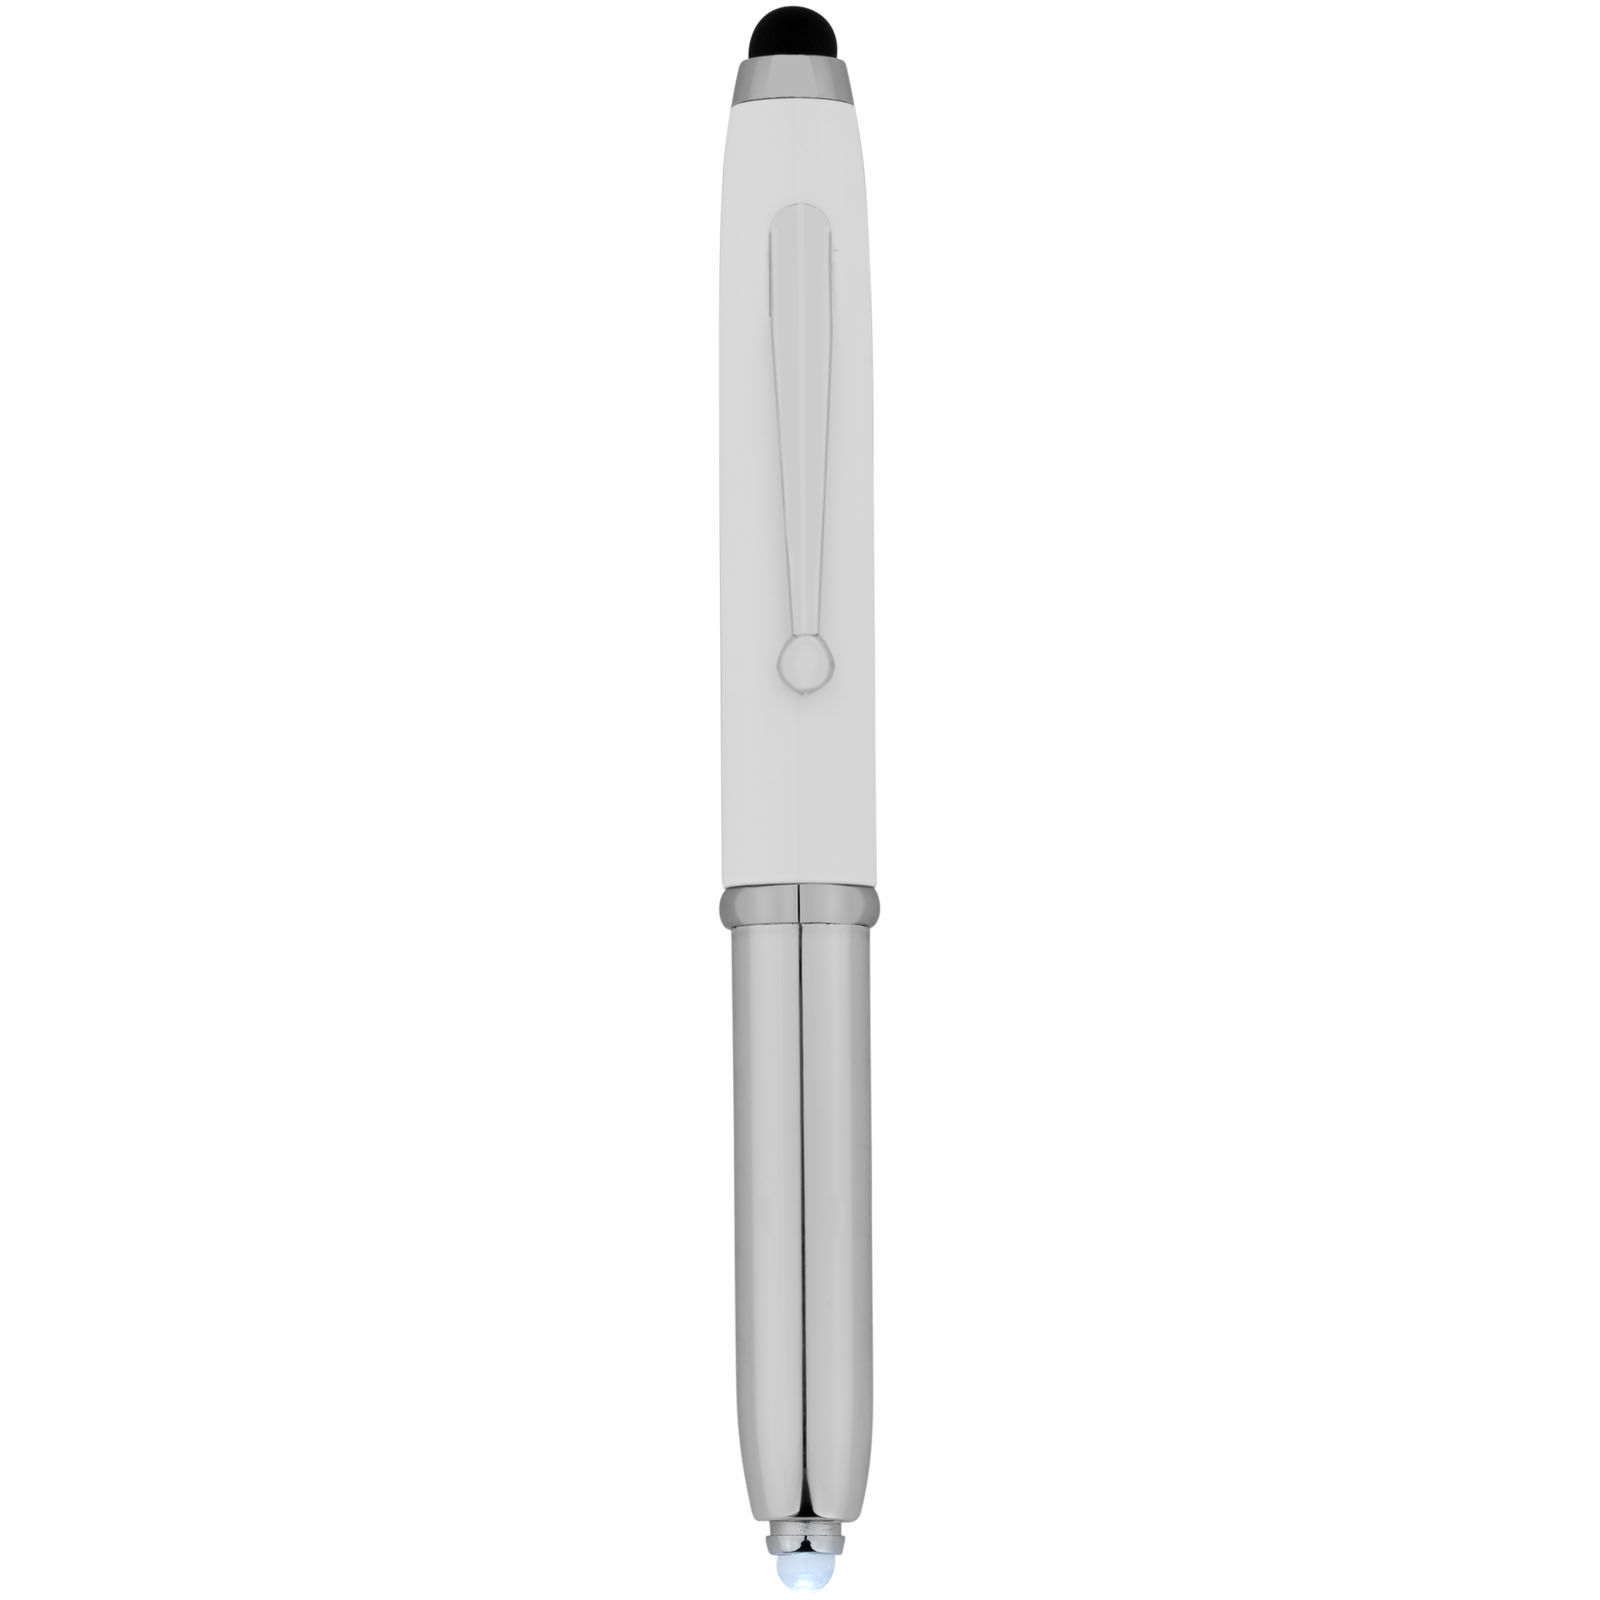 Advertising Ballpoint Pens - Xenon stylus ballpoint pen with LED light - 0